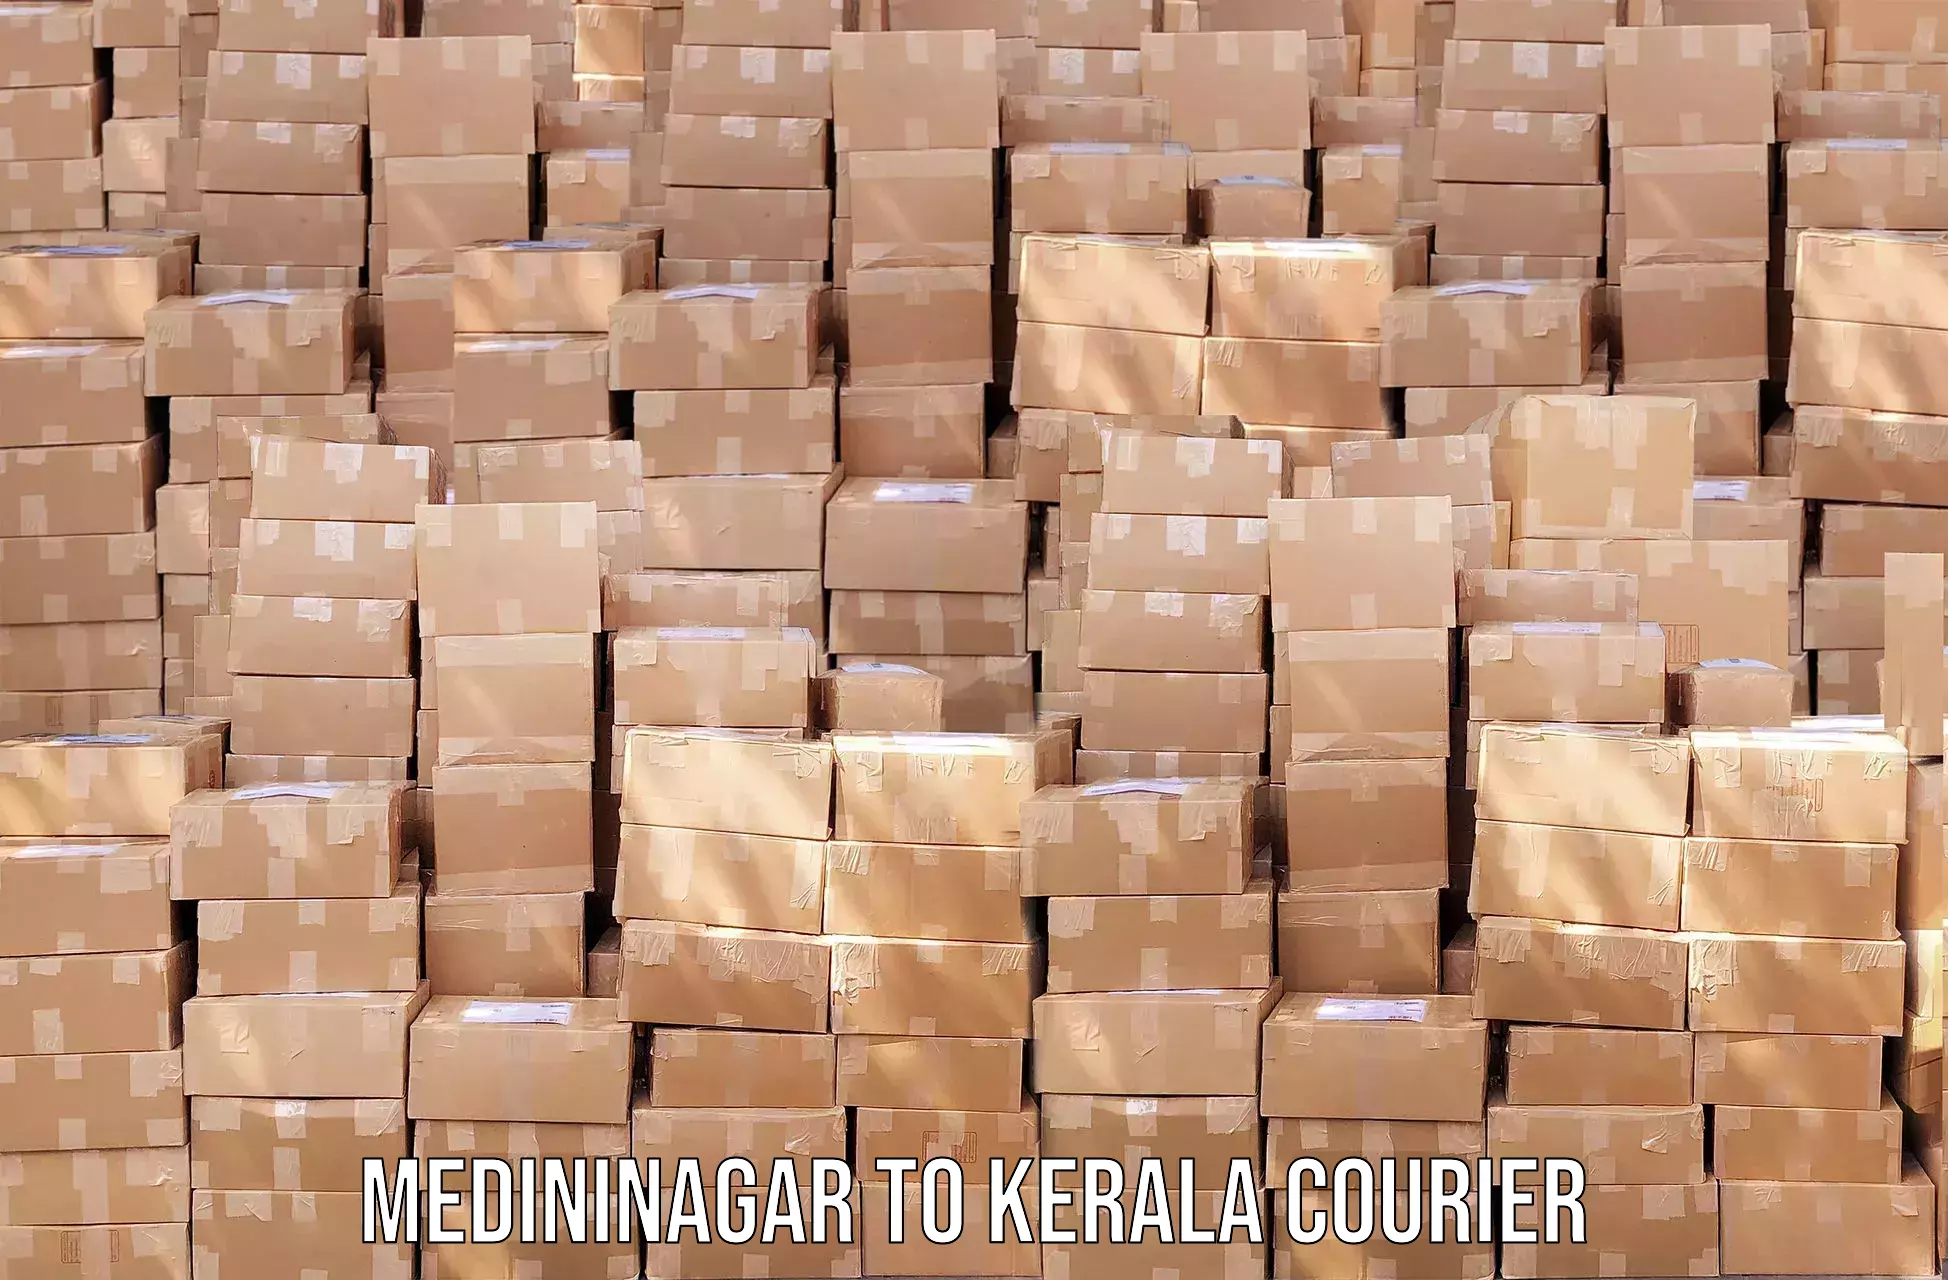 Cash on delivery service Medininagar to Karunagappally